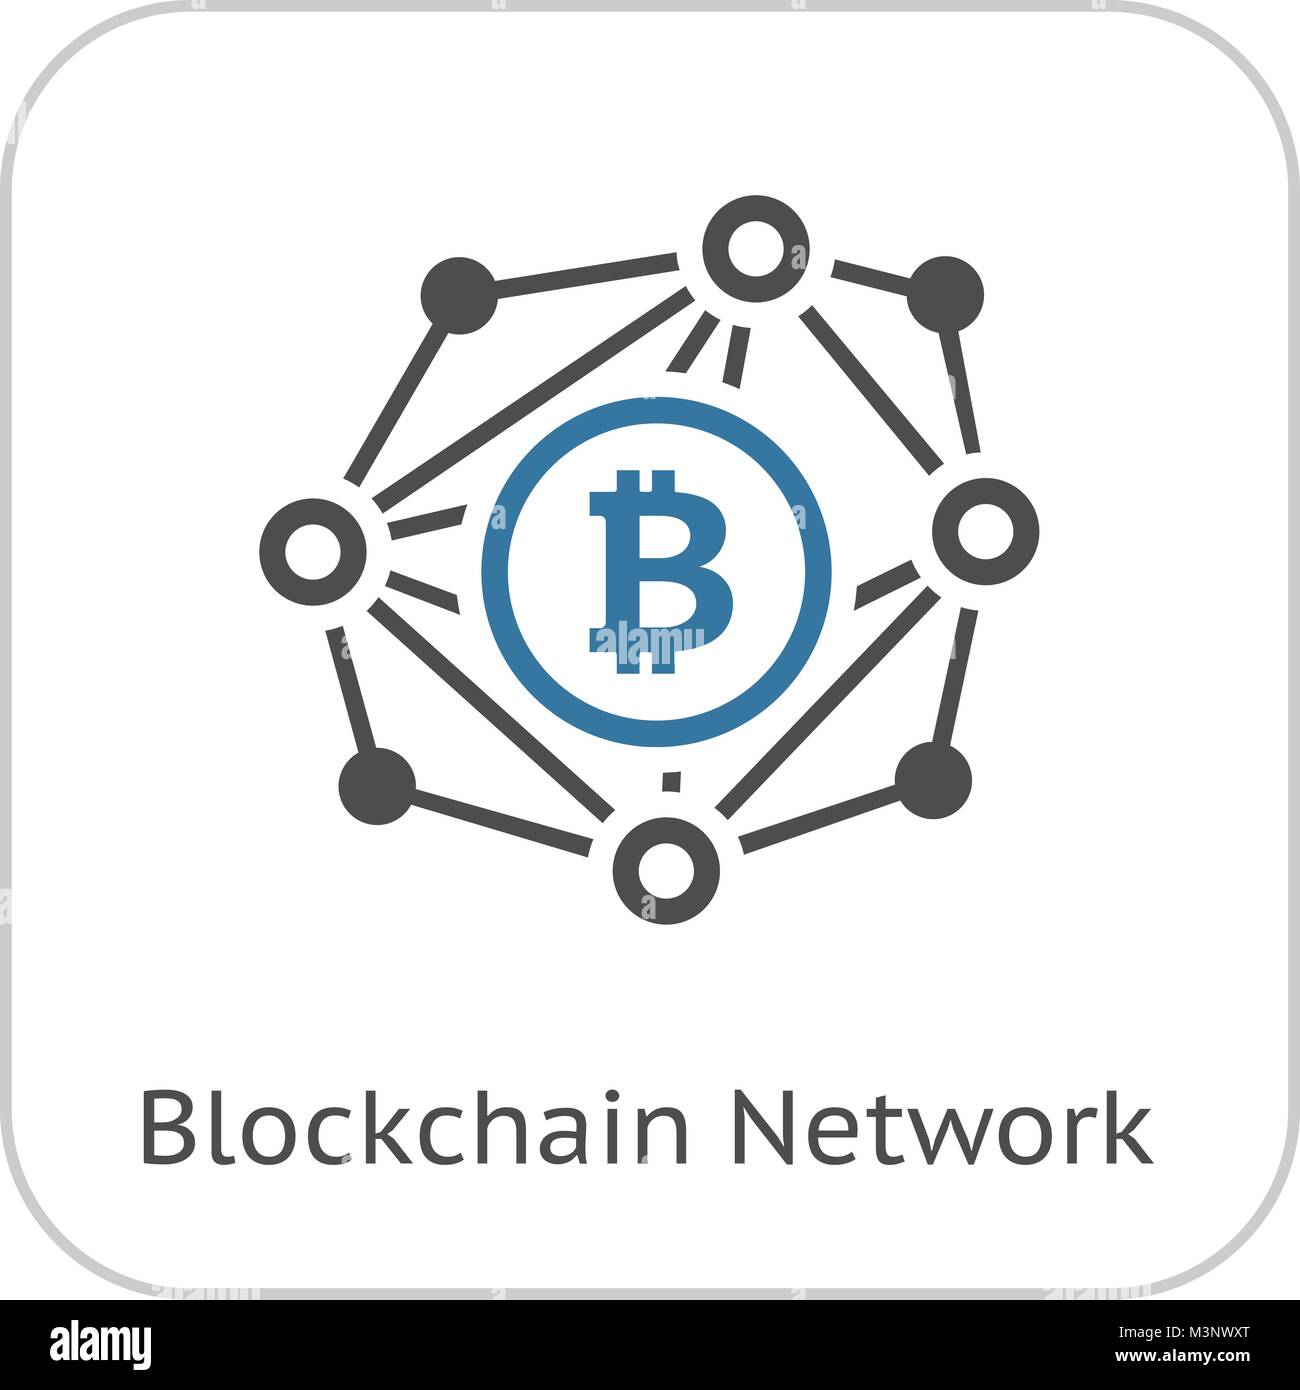 Blockchain Network Icon. Stock Vector